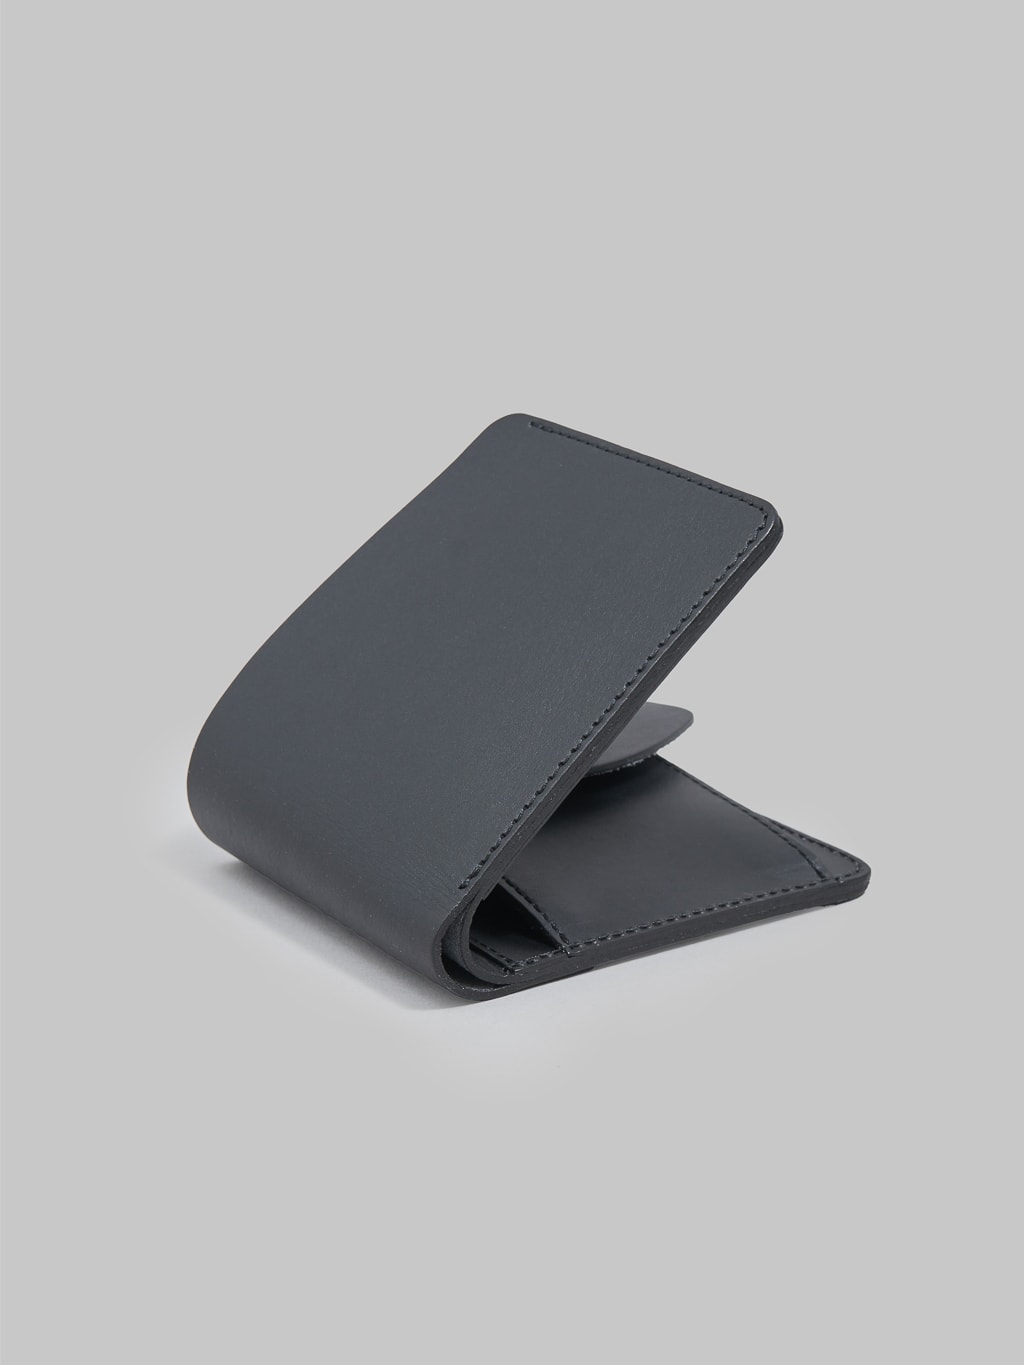 Kobashi Studio premium Leather Fold Wallet Black bill slot